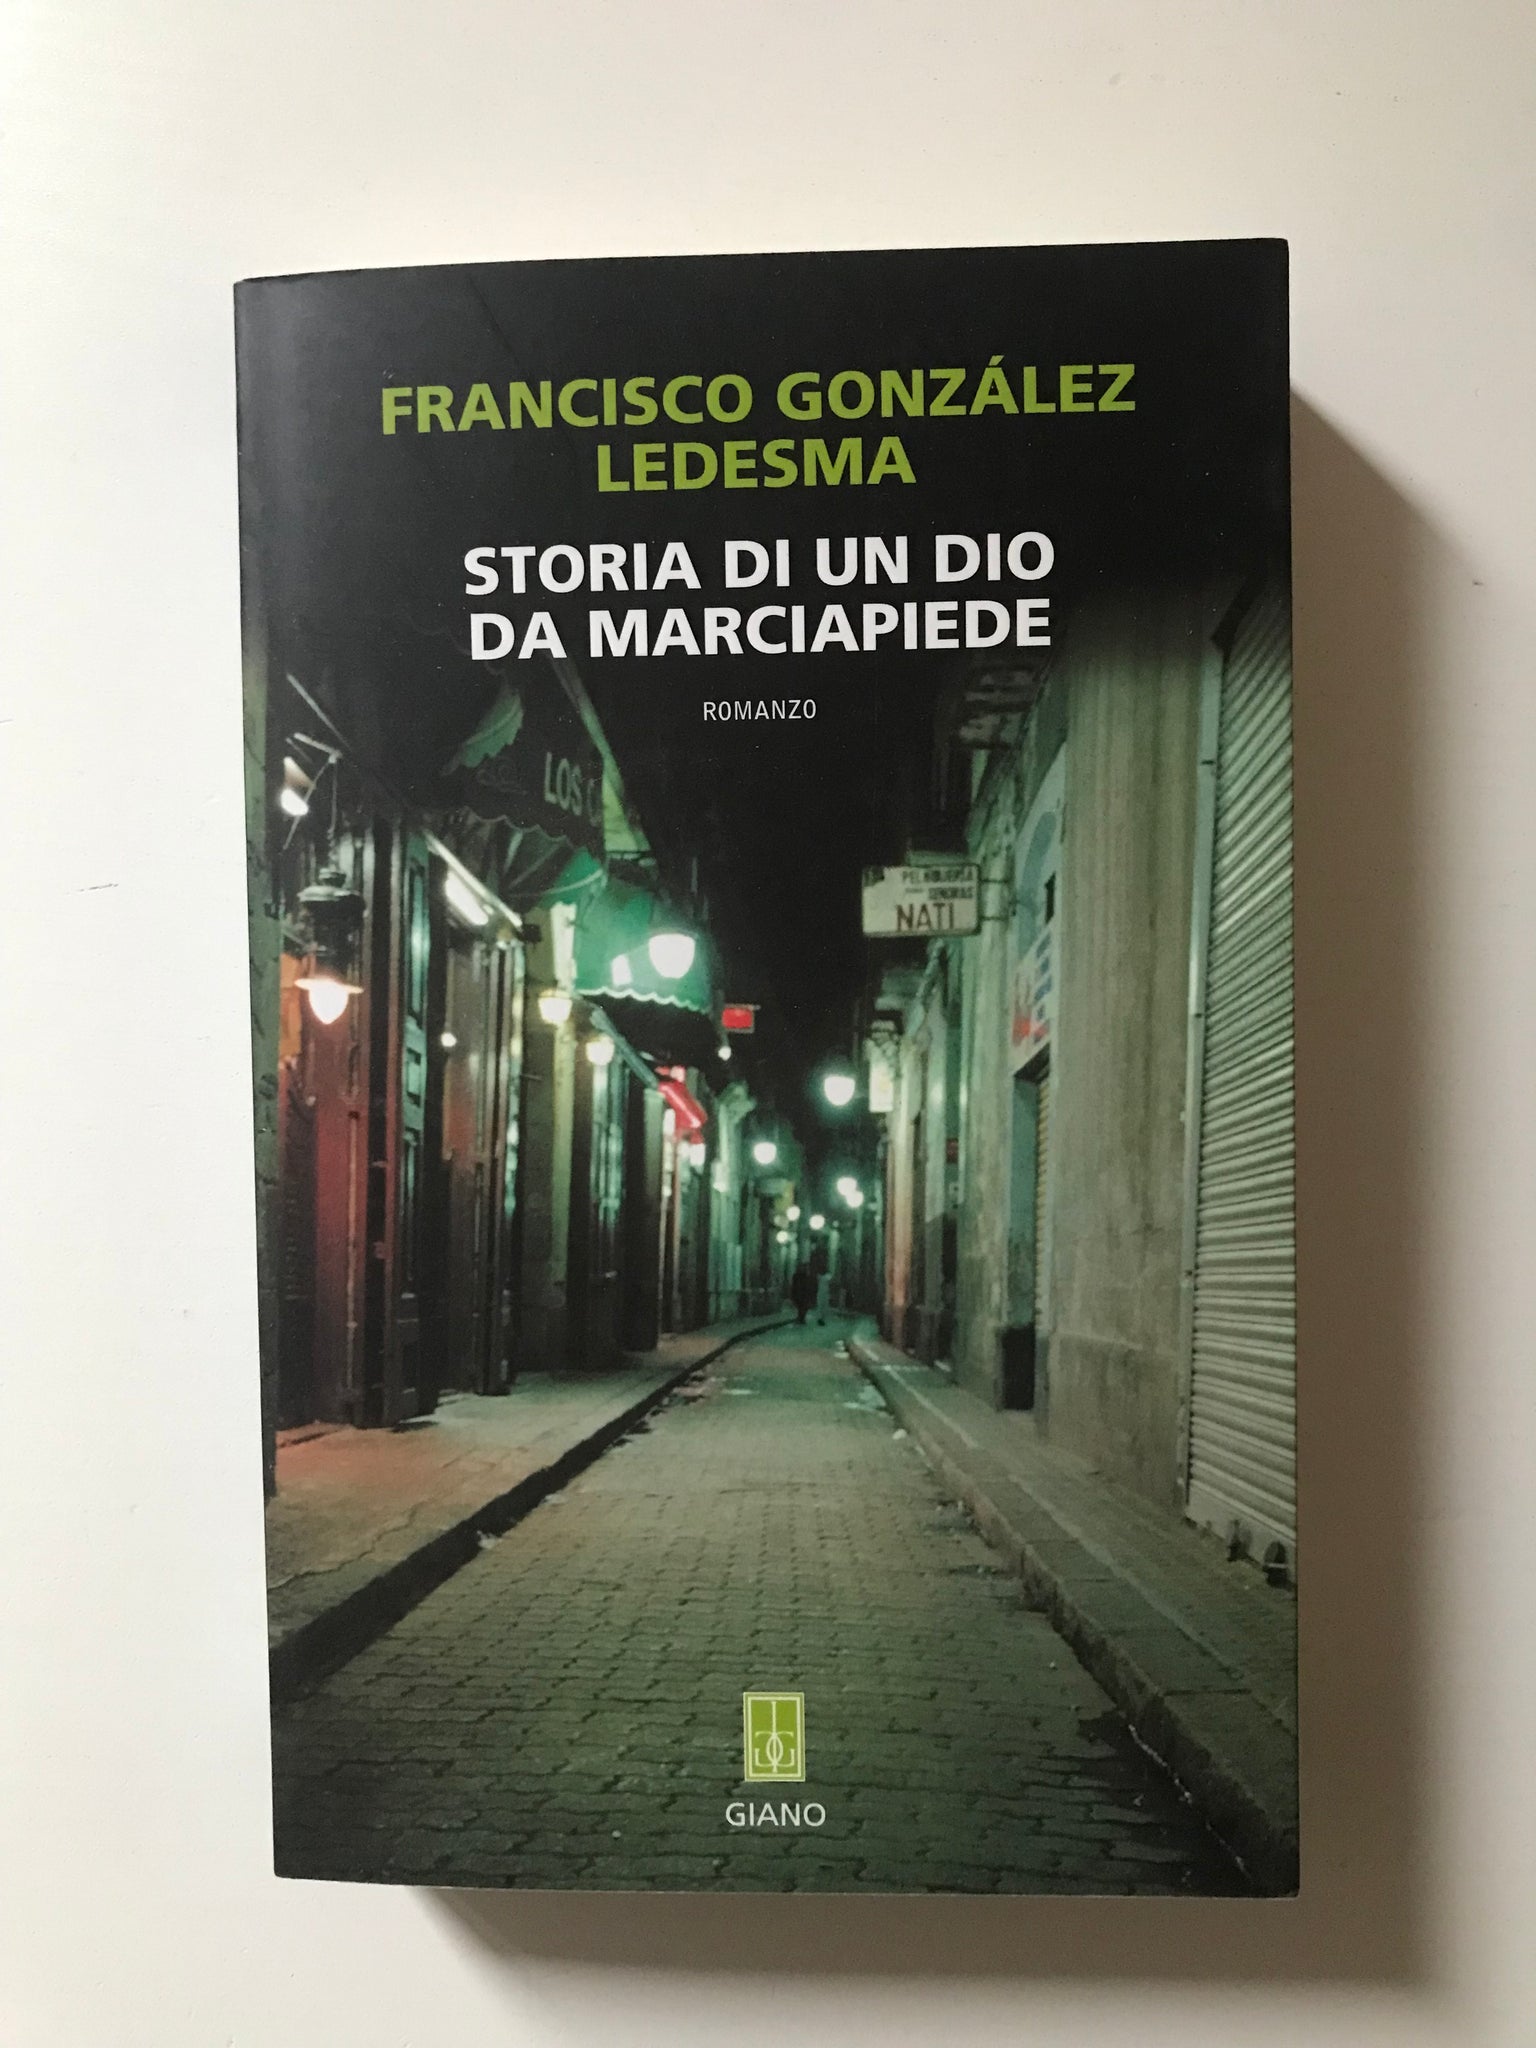 Francisco Gonzalez Ledesma - Storia di un dio da marciapiede